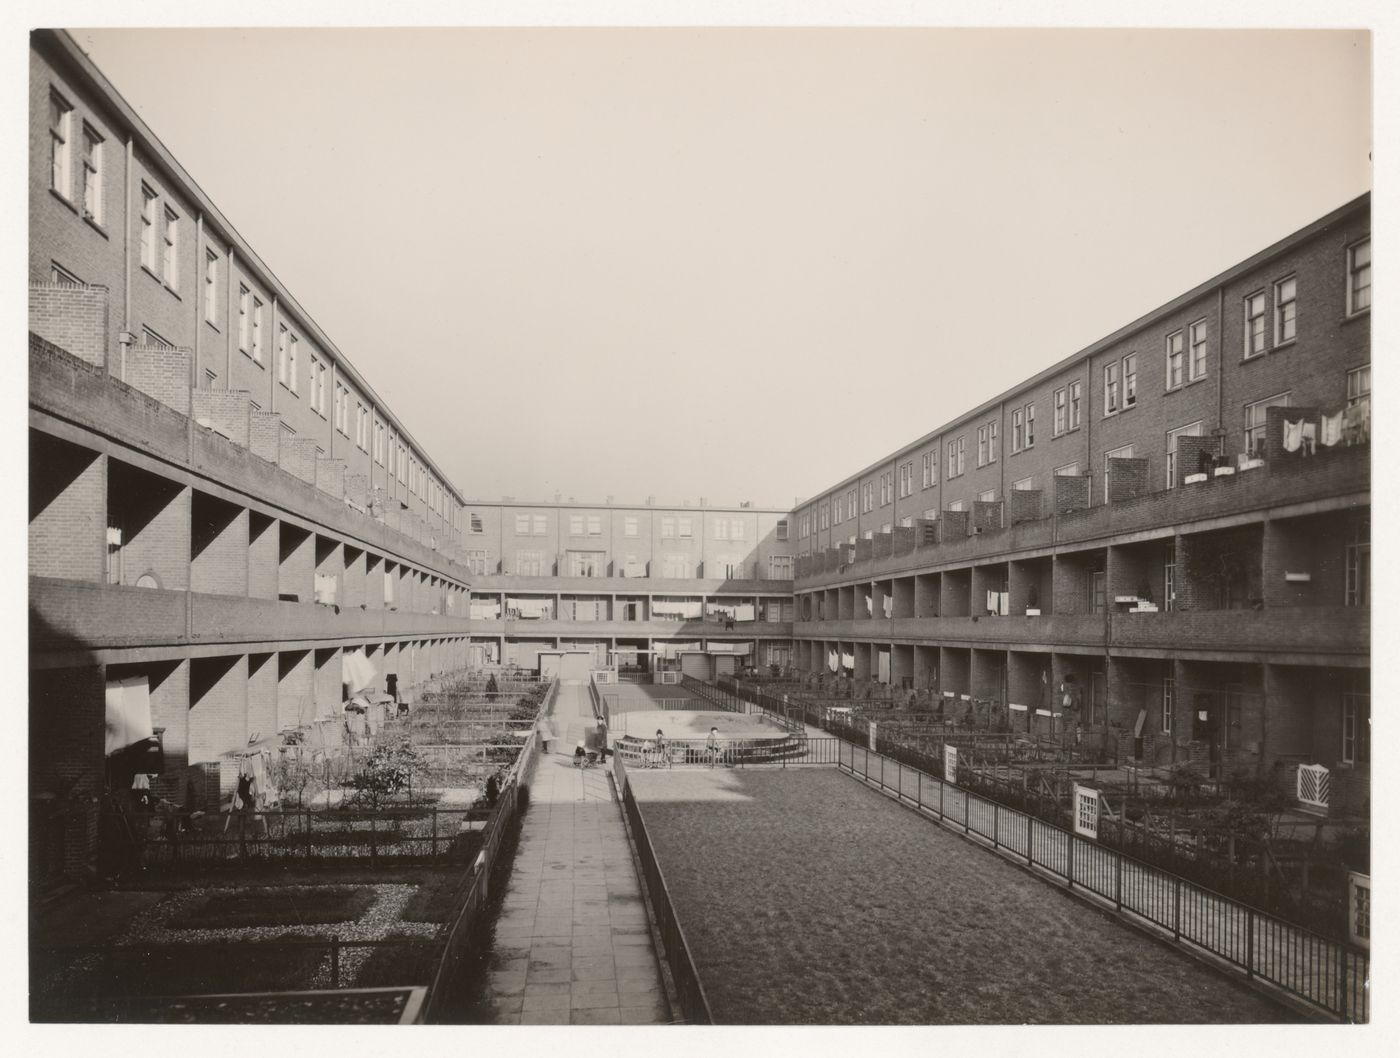 View of the central courtyard of Tusschendijken Housing Estate, Rotterdam, Netherlands